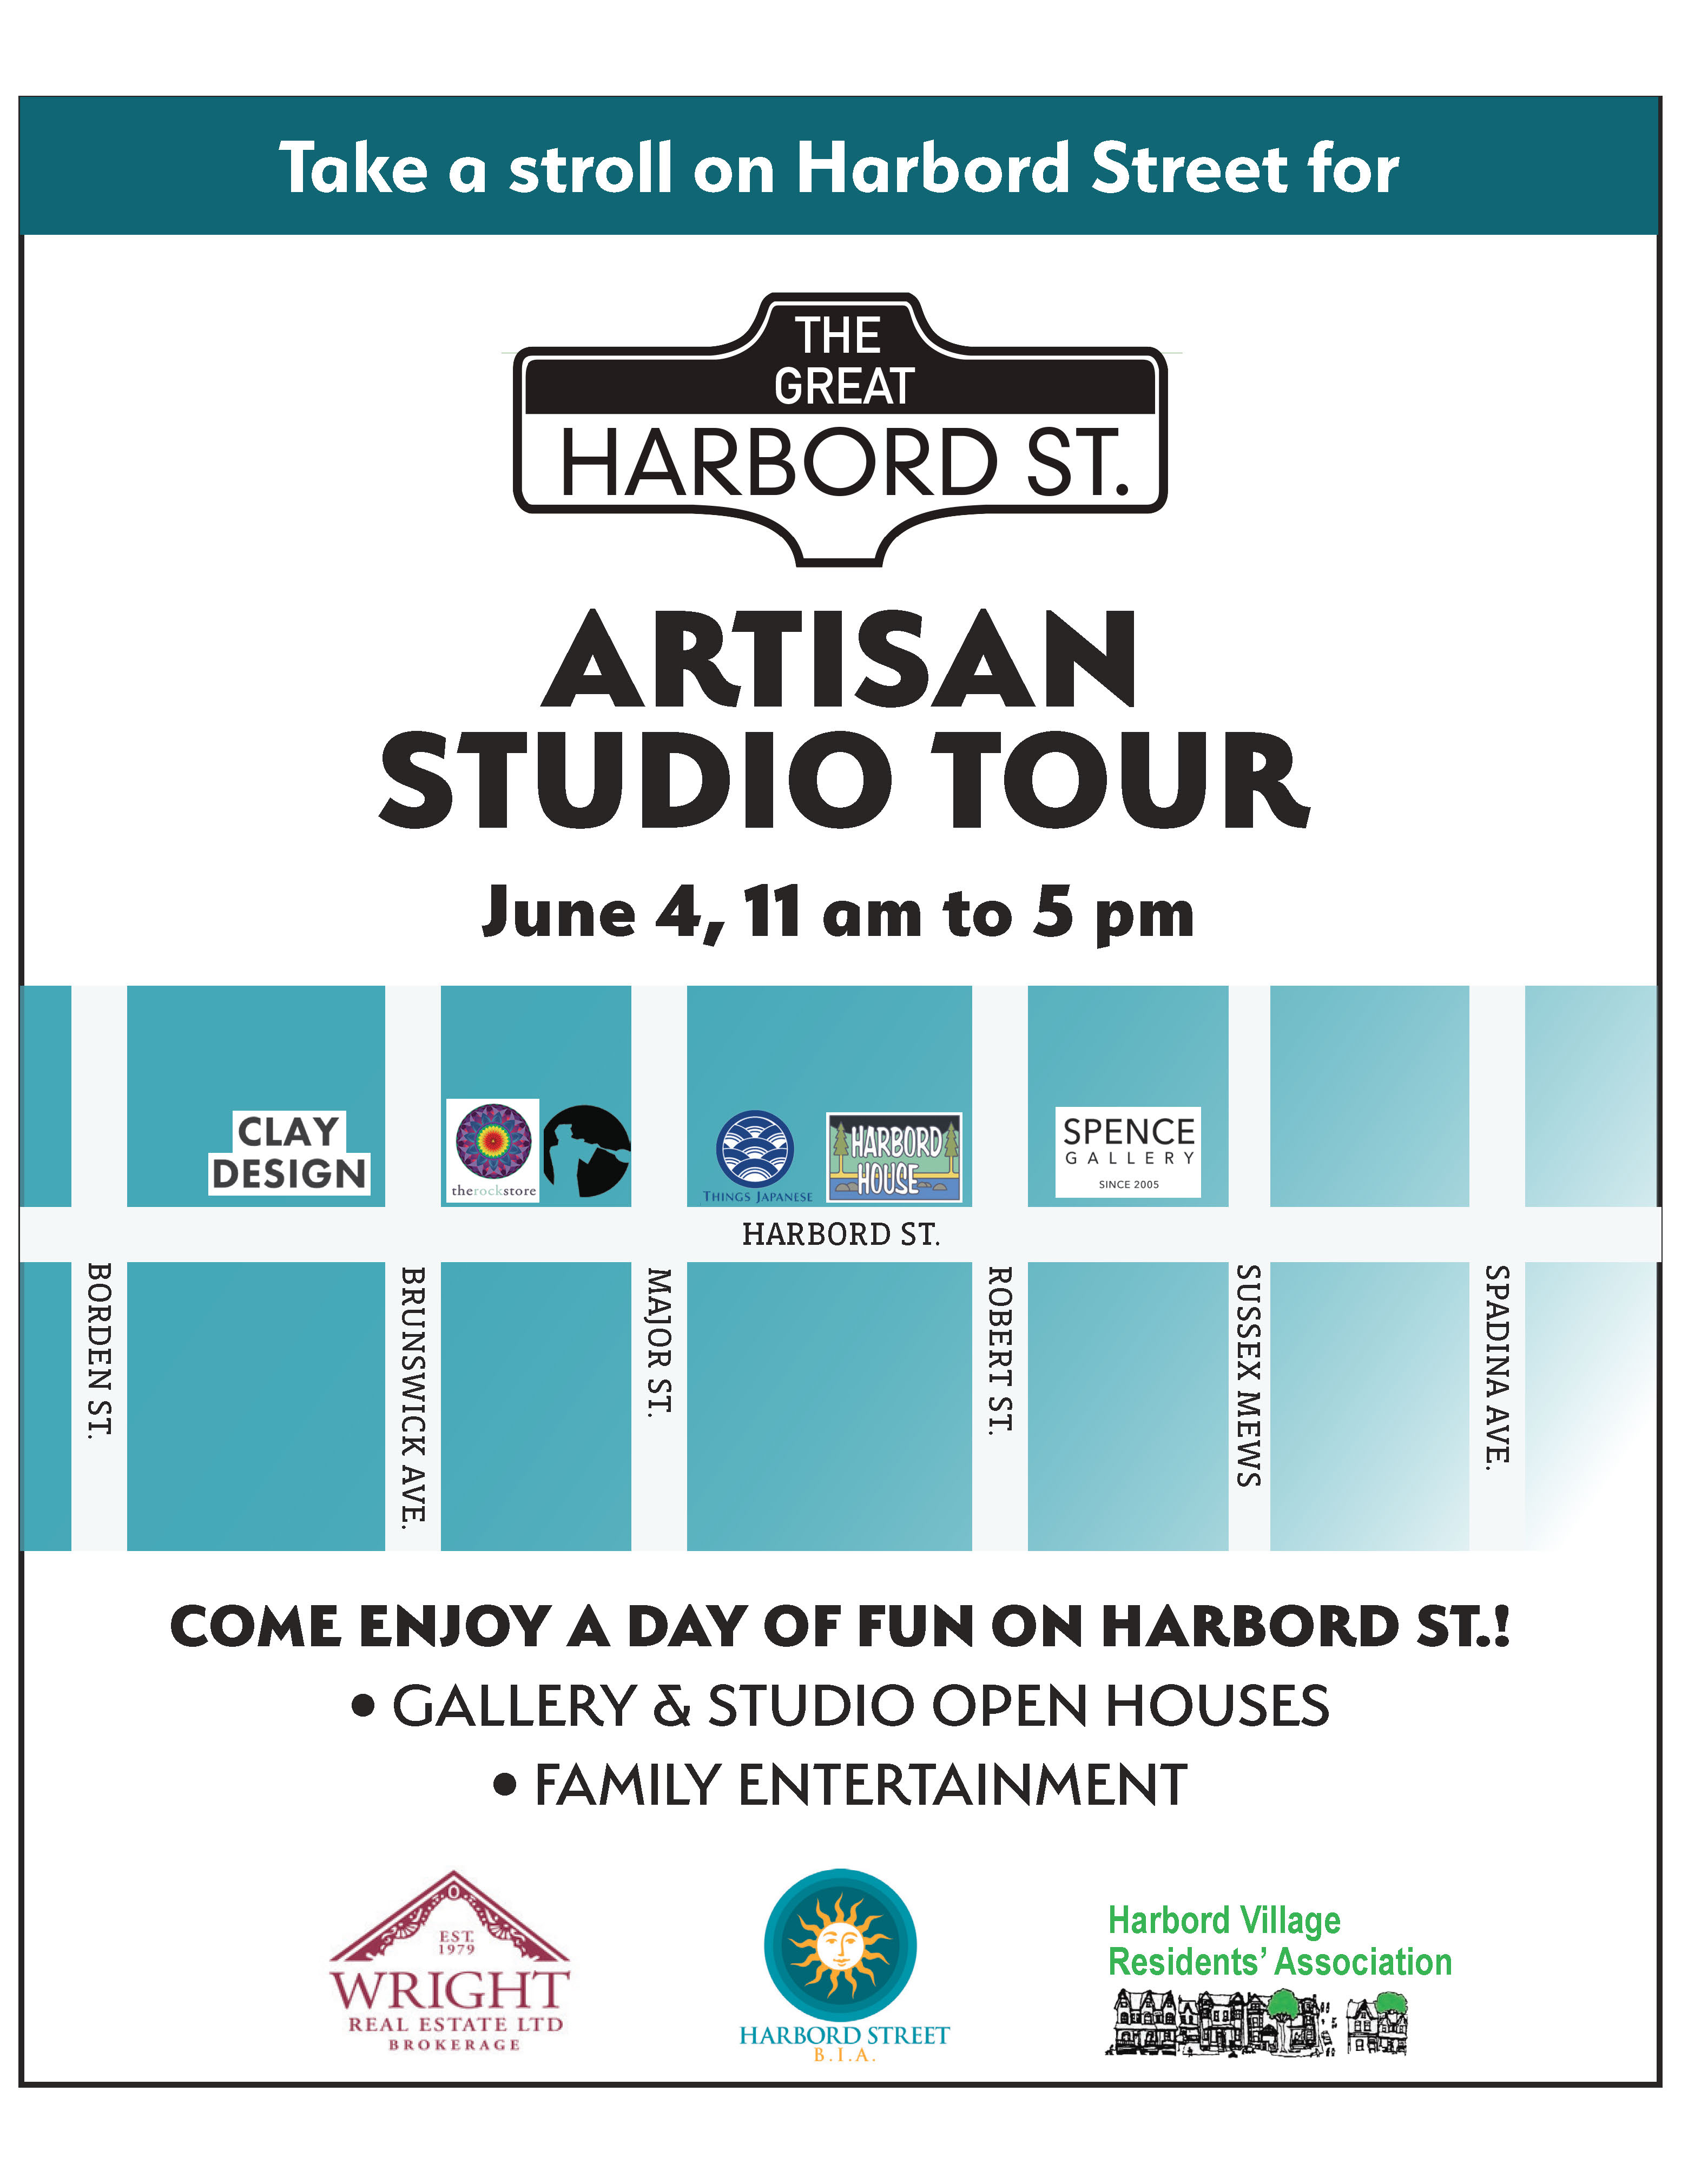 Harbord Street Artisan StudioTour, Saturday June 4, 2022, 11am to 5pm